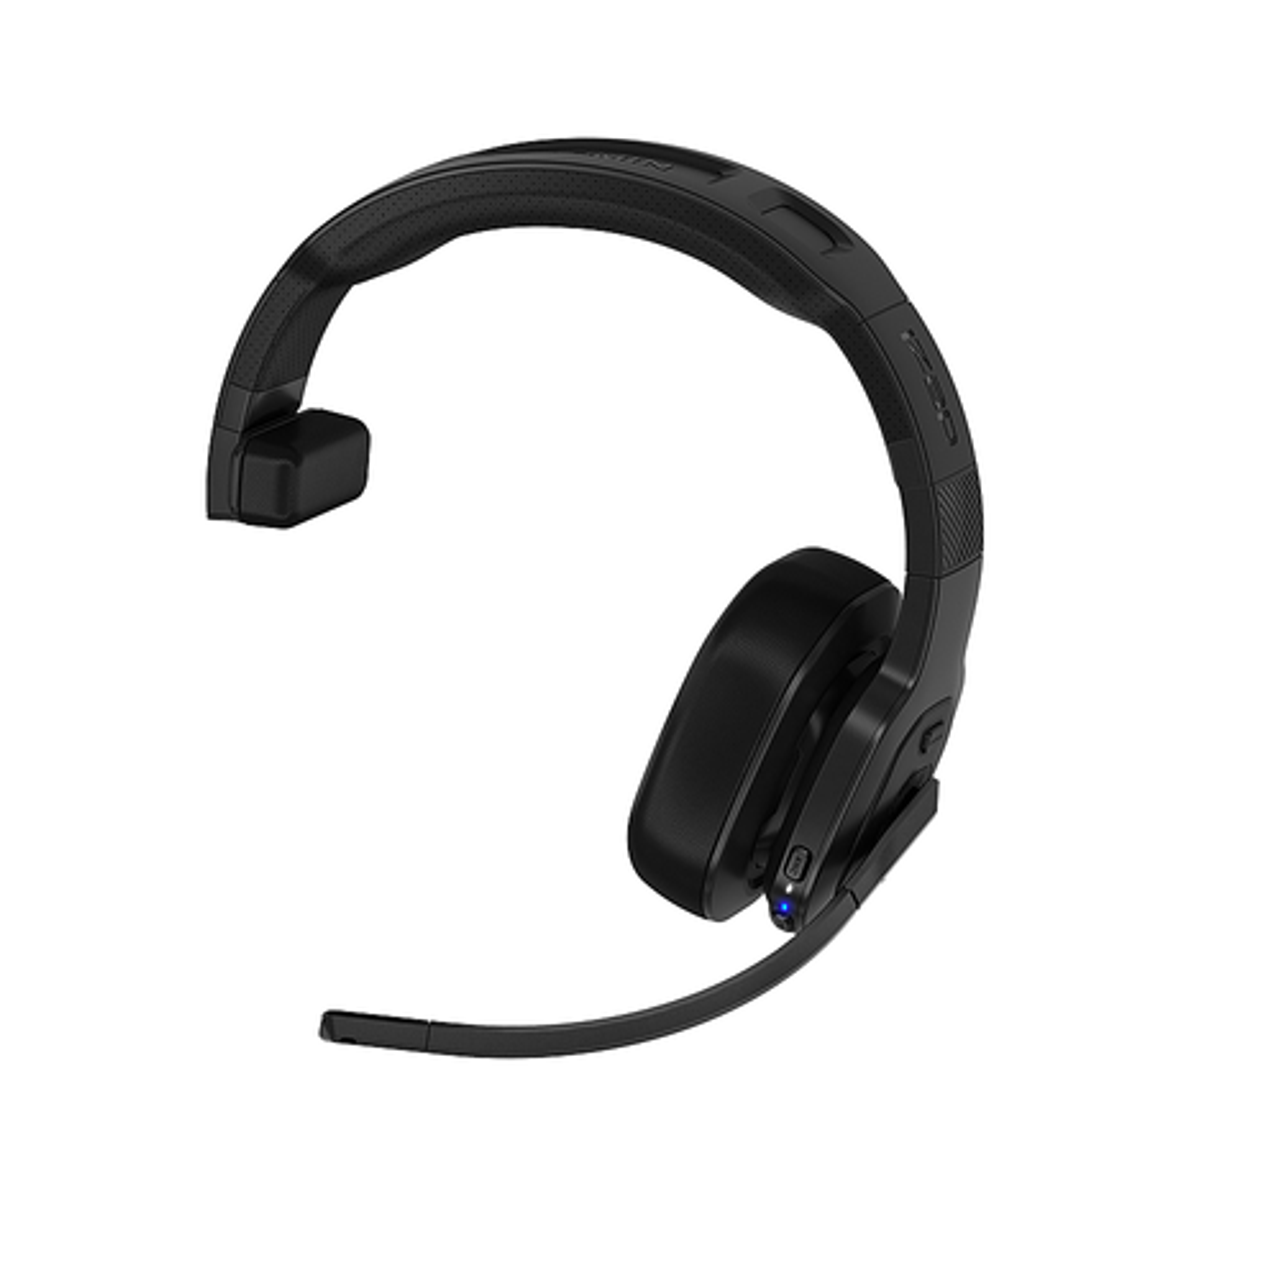 Garmin - dezl 100 Bluetooth Single Ear Headset - Black